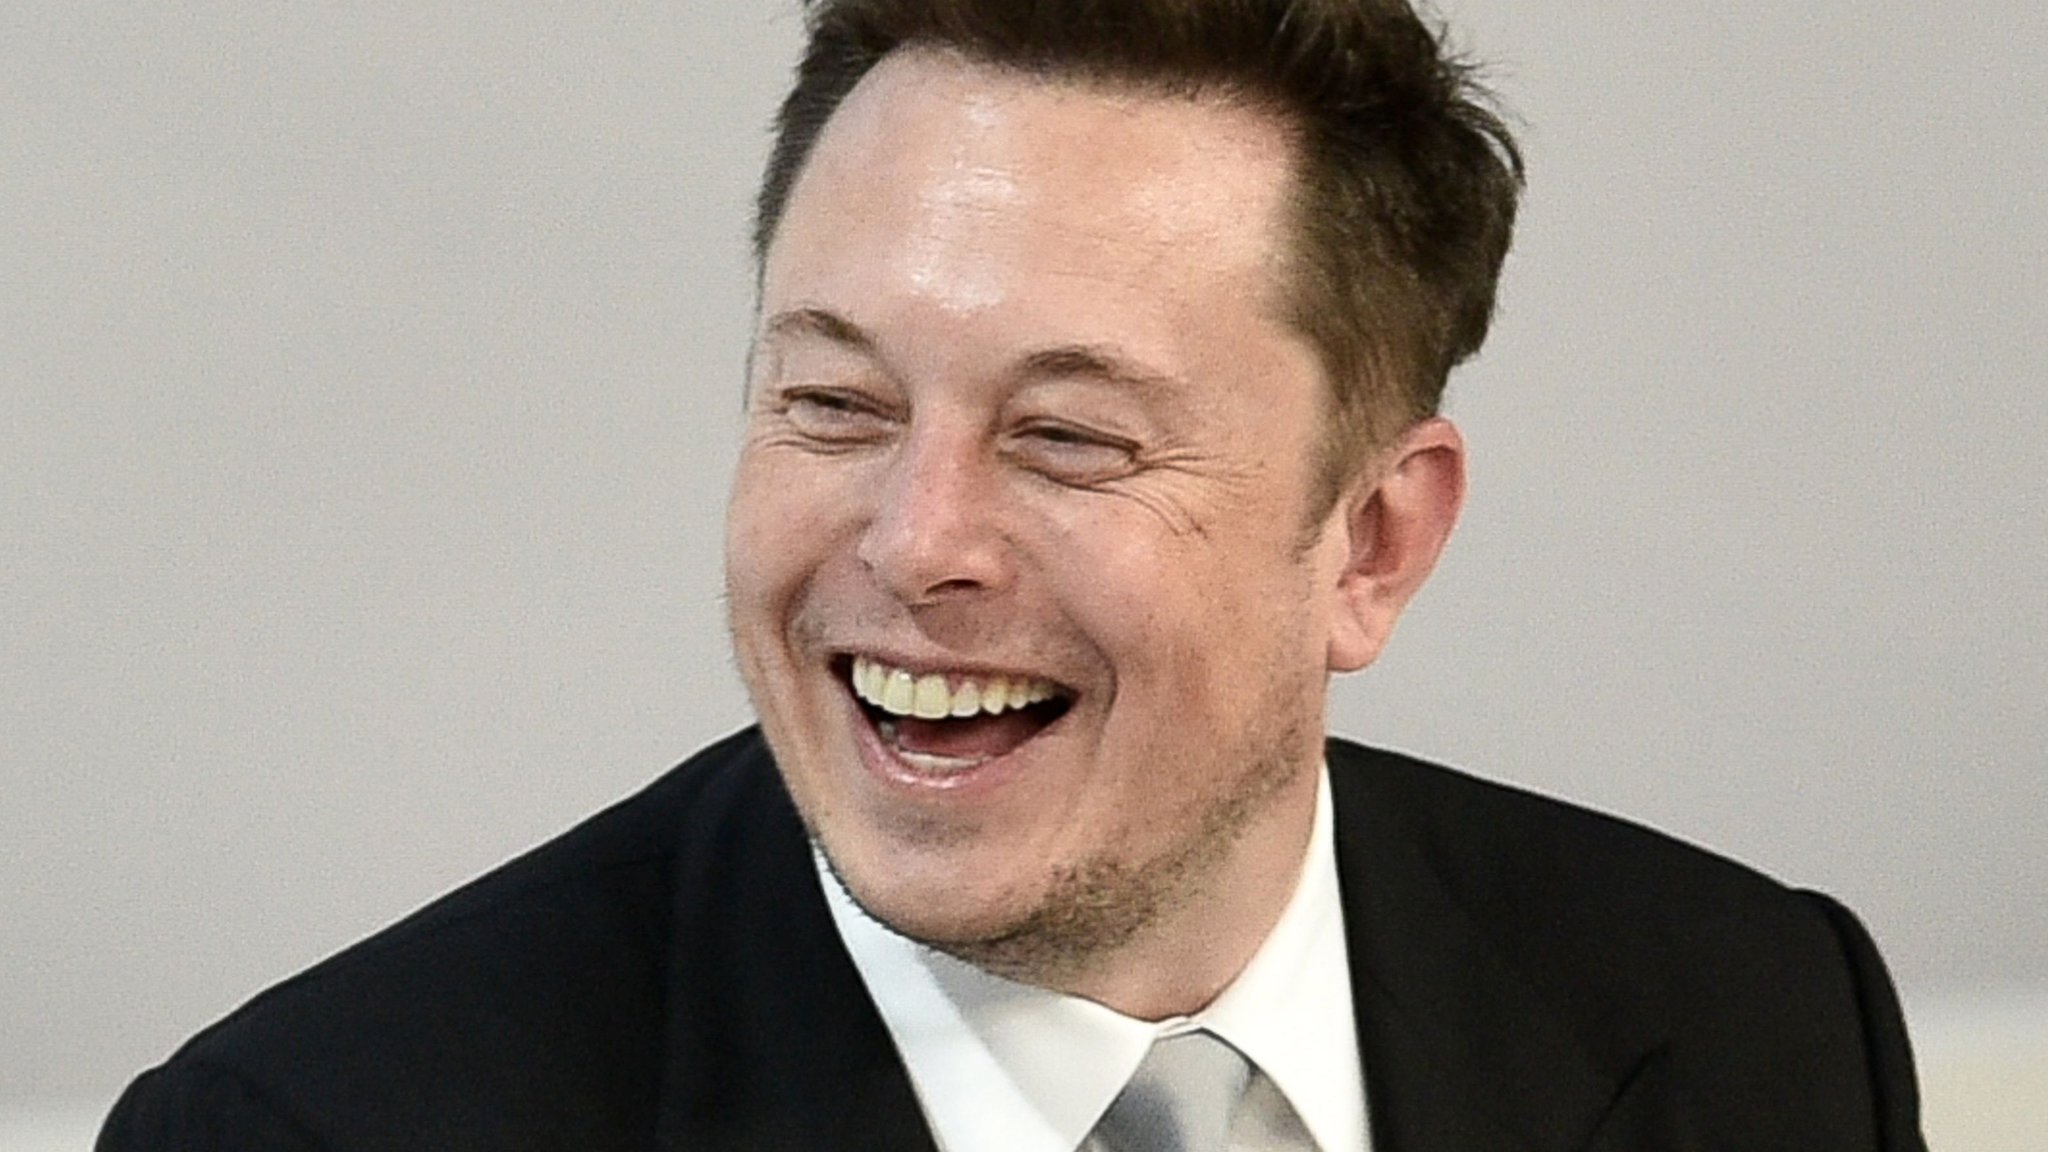 Elon Musk Shares Profile Picture With A Moustache, Starts Meme Fest